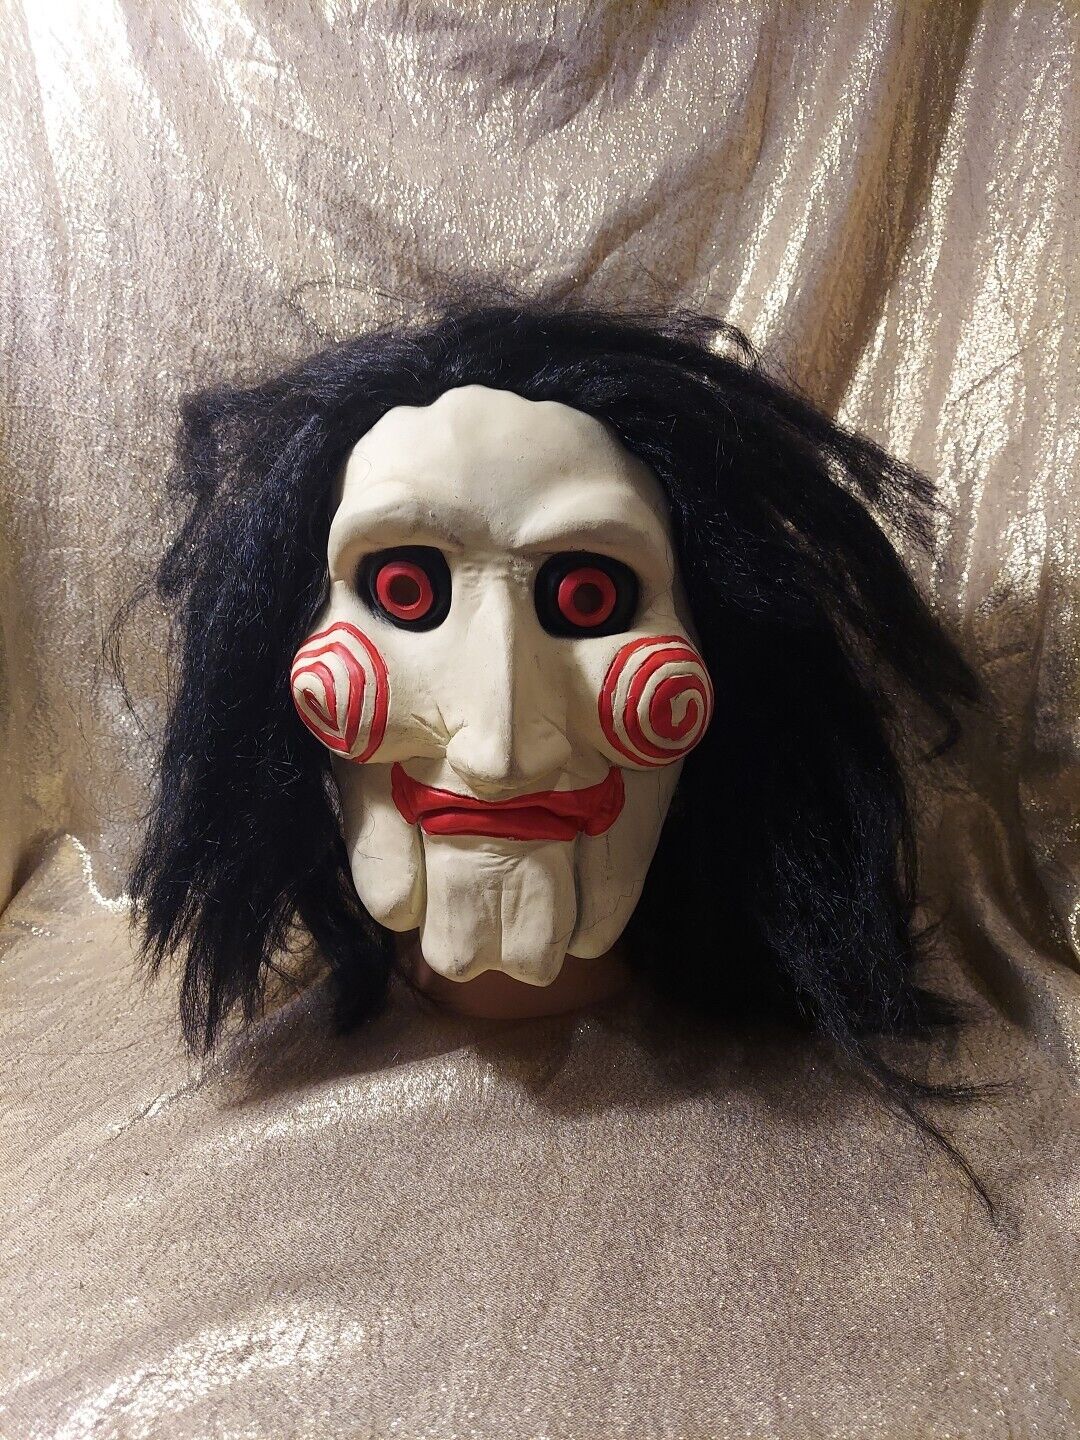 Vintage Saw Jigsaw Mask Rubber Latex Halloween Costume 2004 Serial Killer Movie